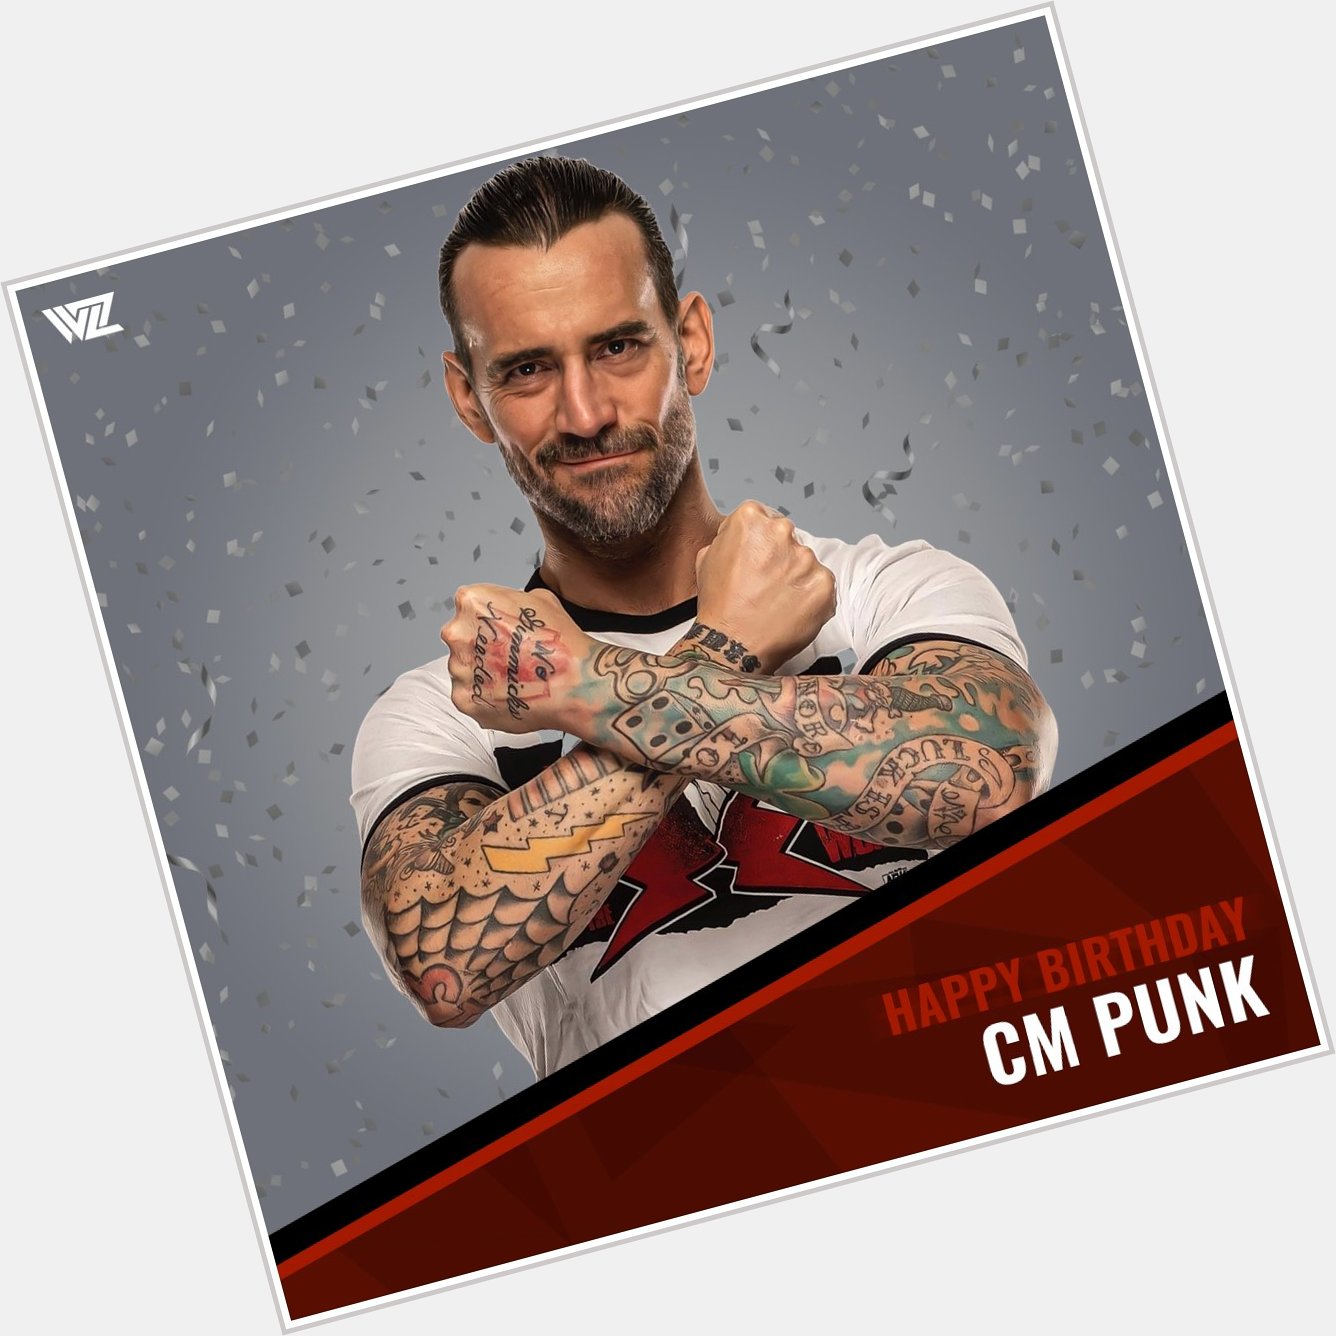 Happy Birthday to CM Punk! 

Punk was born on October 26, 1978 